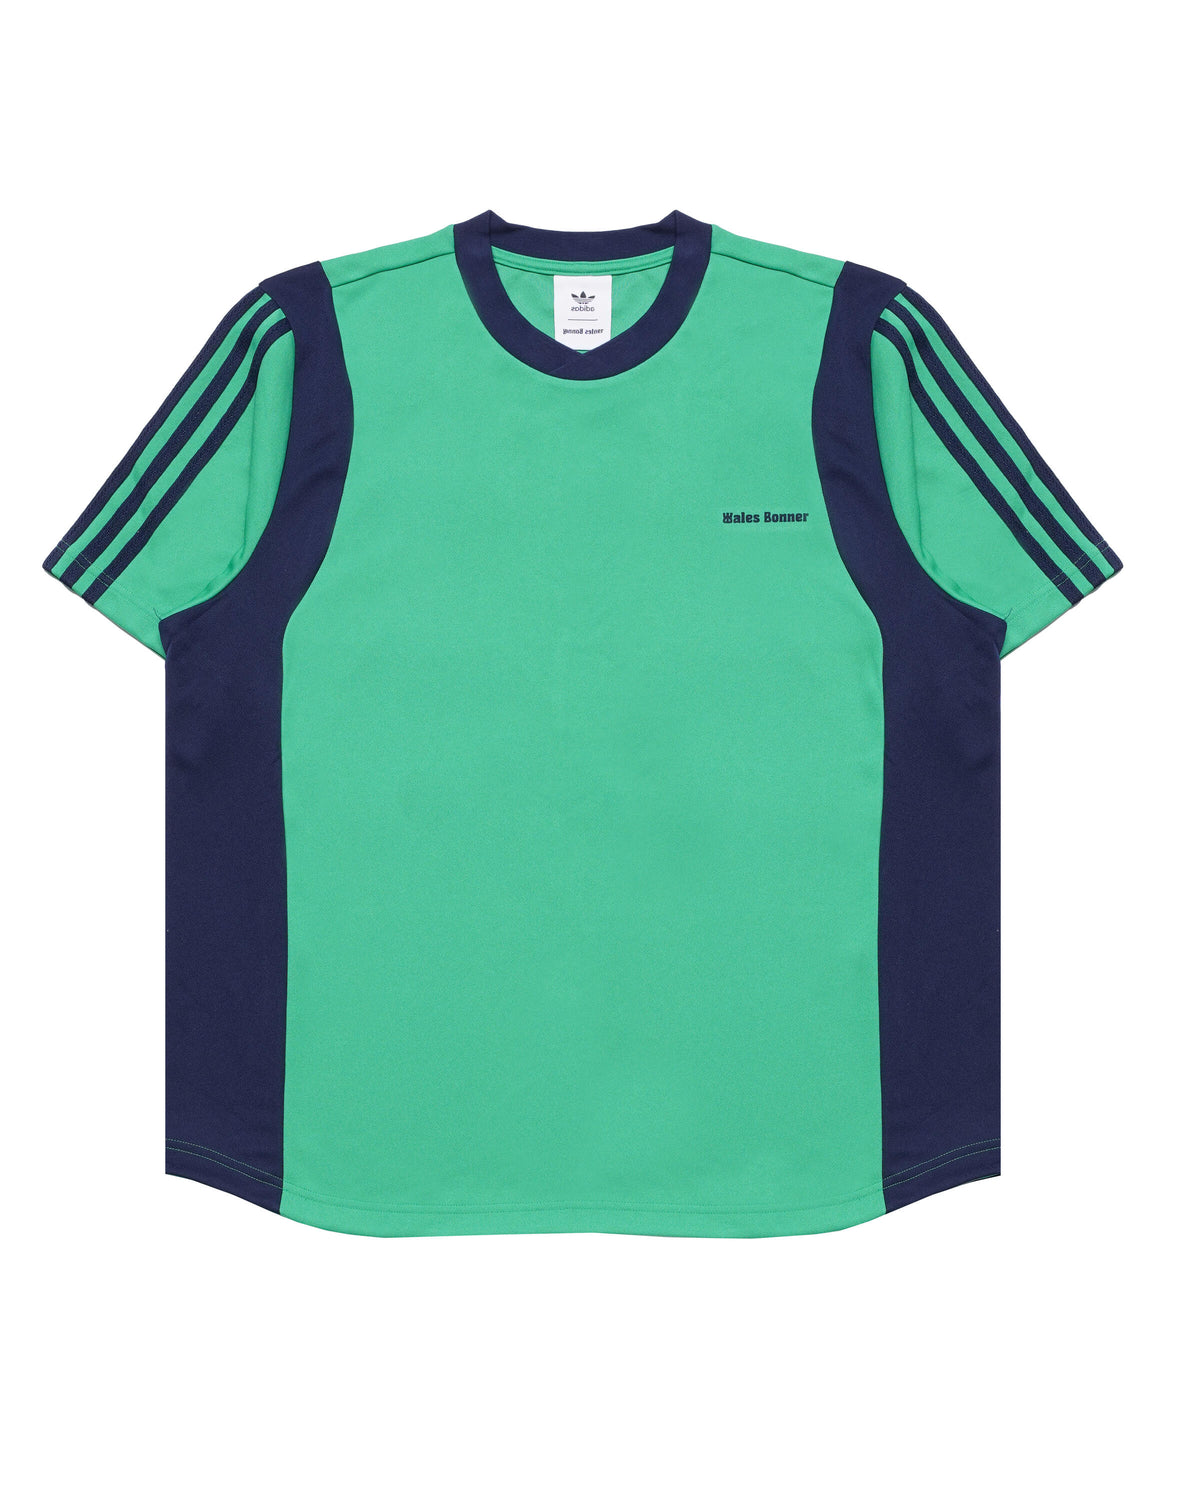 Adidas originals x Wales Bonner Football SHIRT